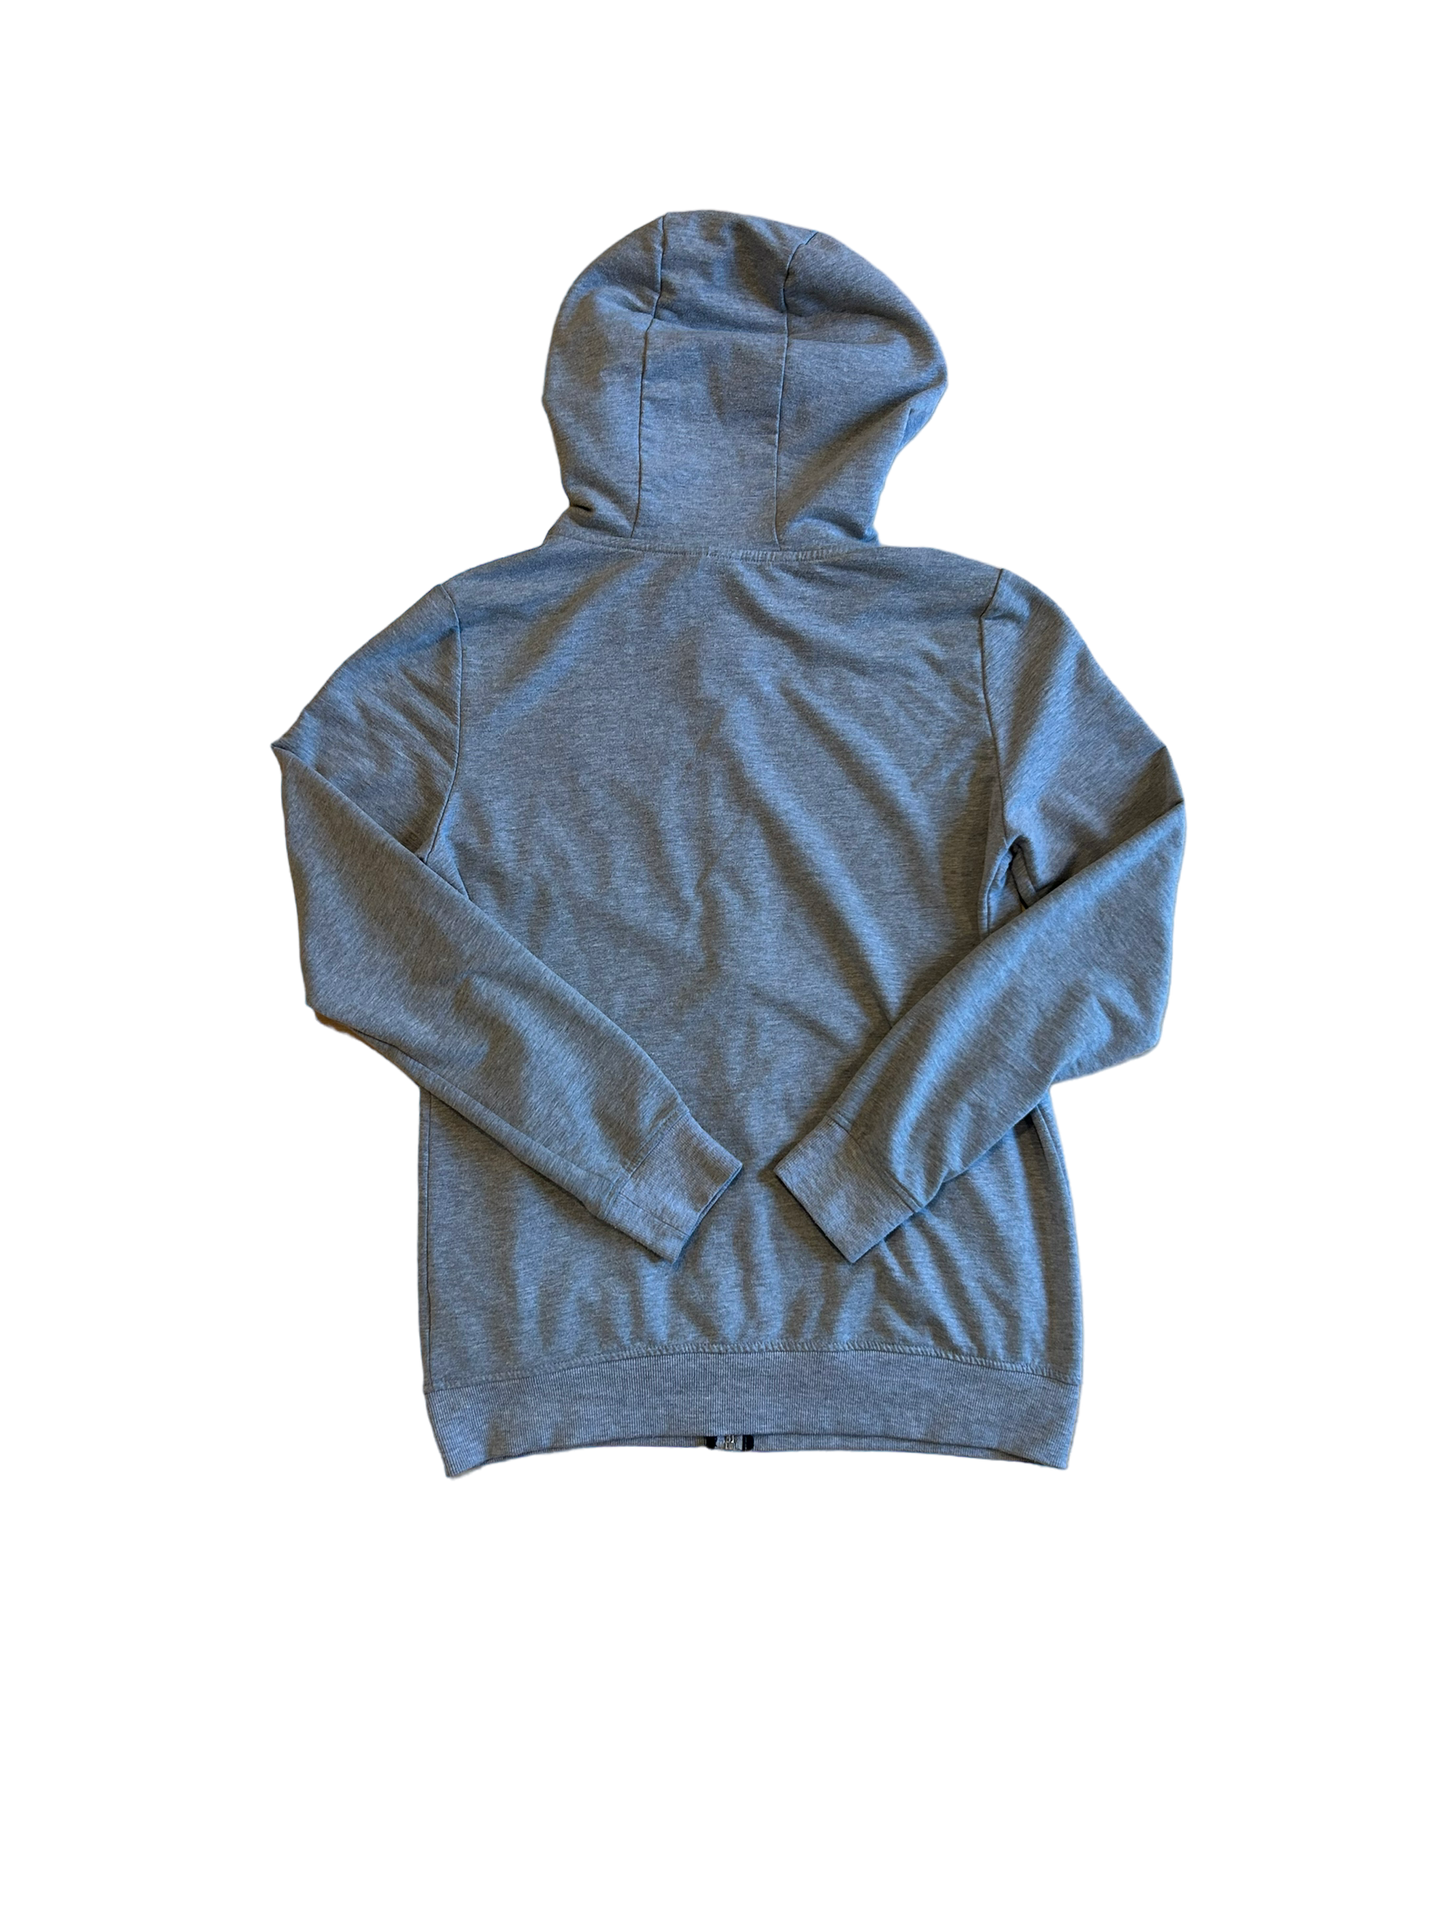 Most Rated Grey Zip-Up hoodie